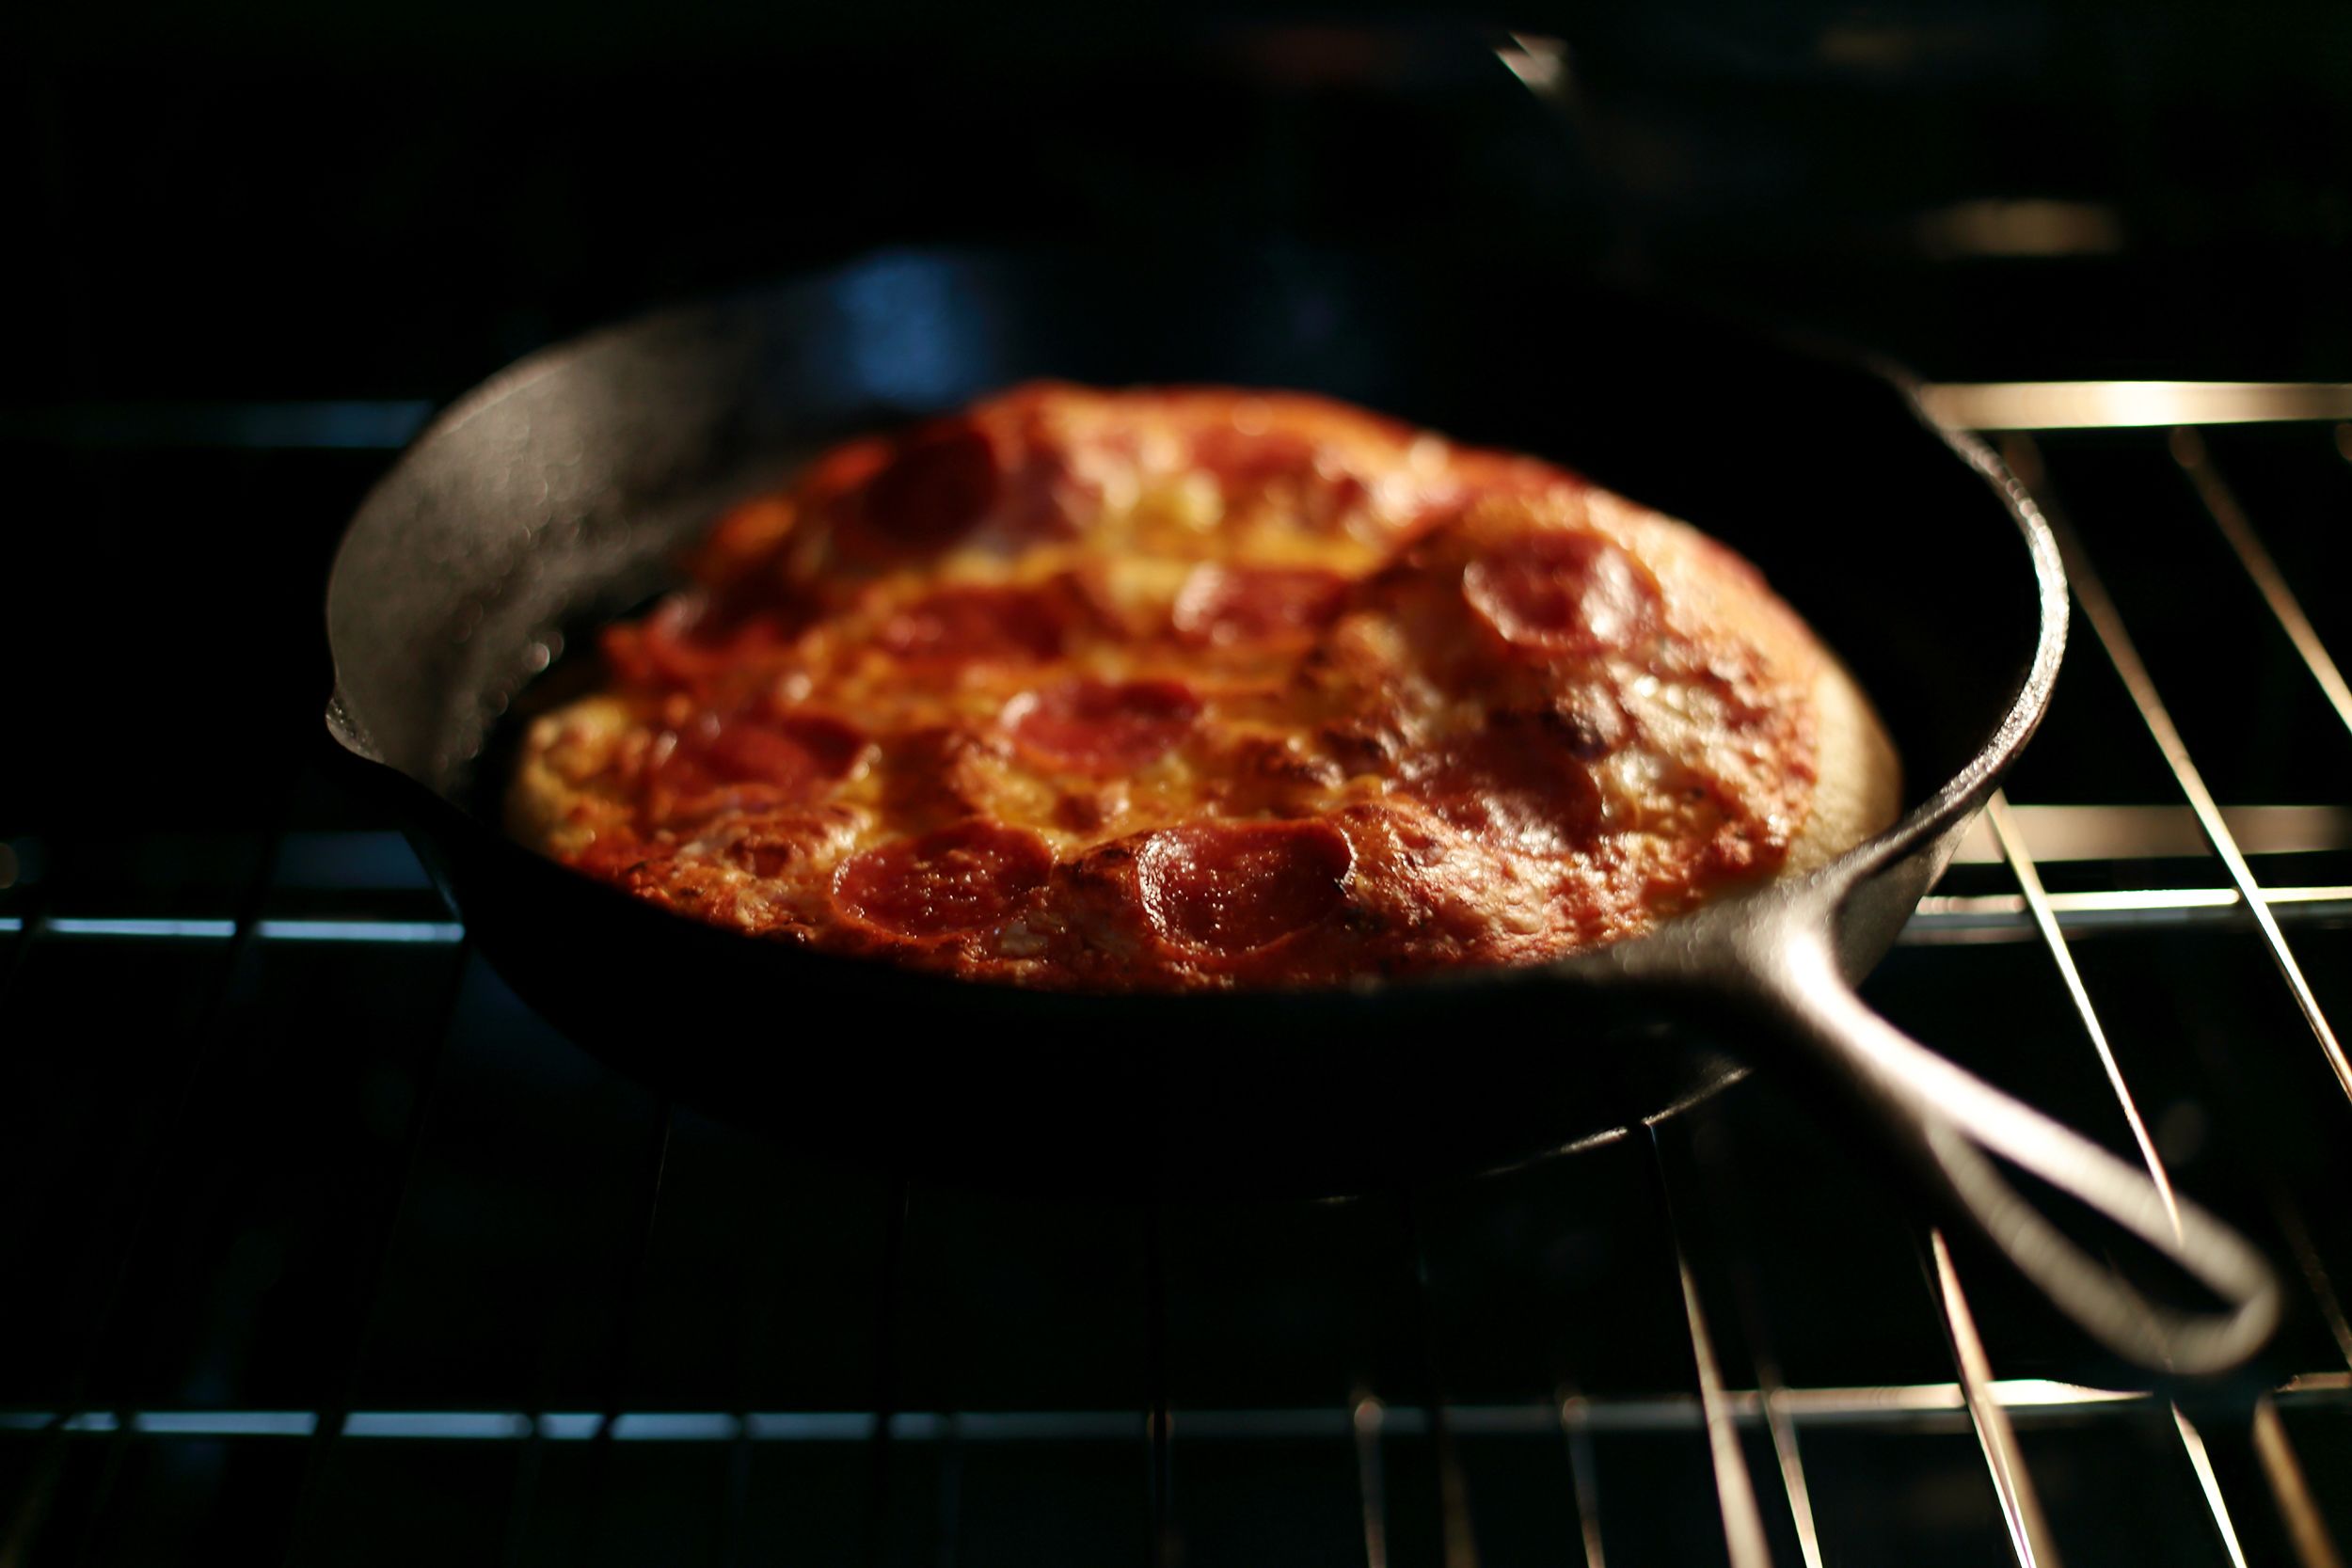 https://media.cnn.com/api/v1/images/stellar/prod/220804145406-02-cast-iron-meals-pizza.jpg?c=original